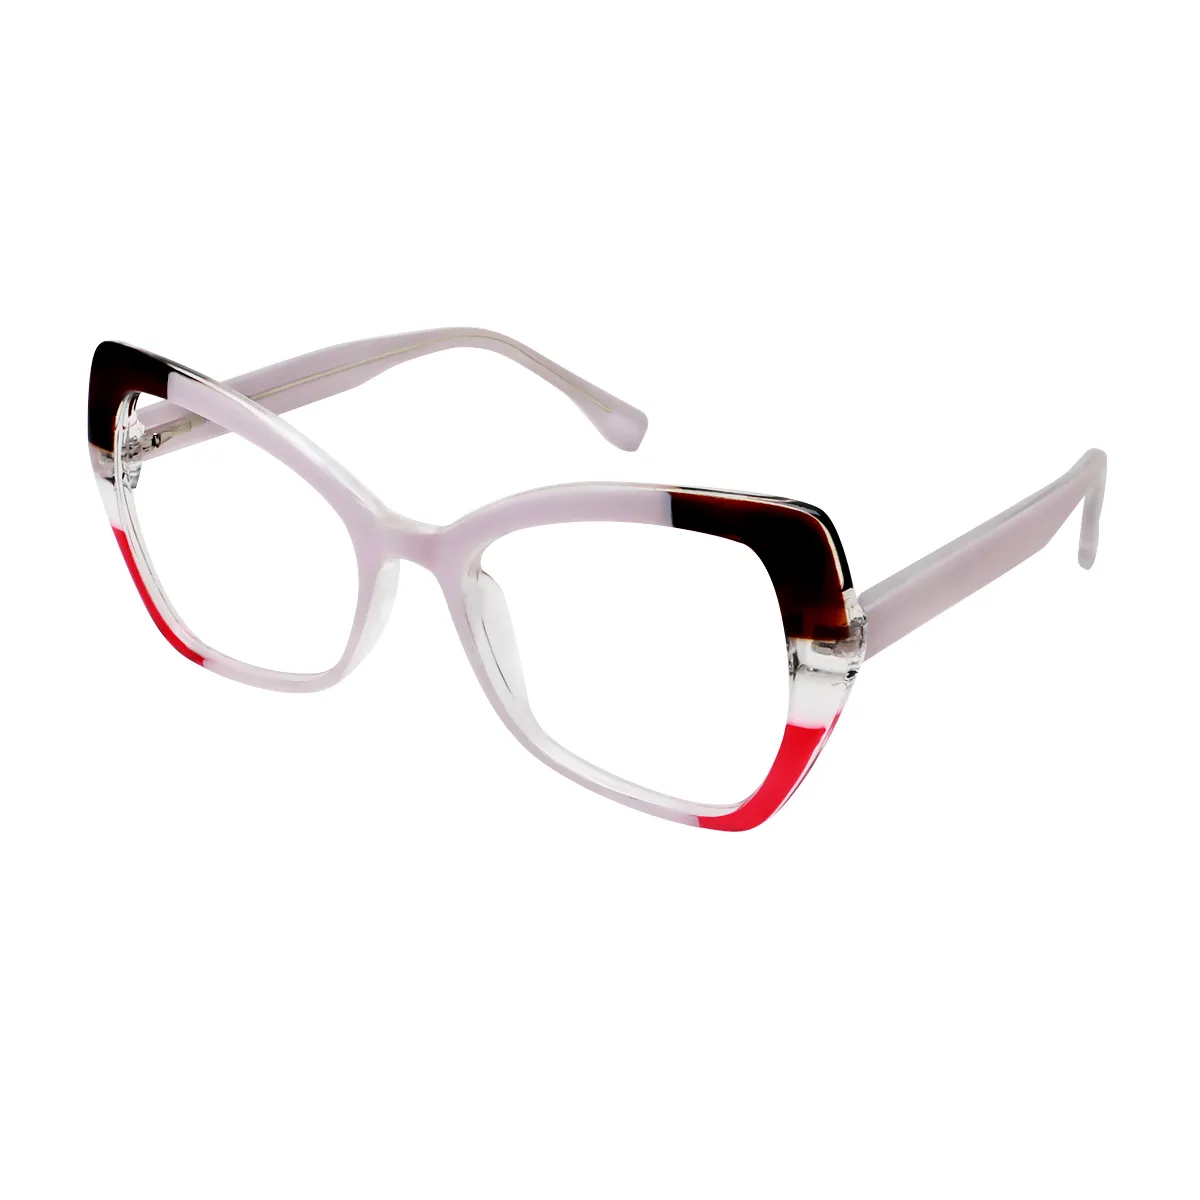 Hubris - Cat-eye Pink-Brown Glasses for Women